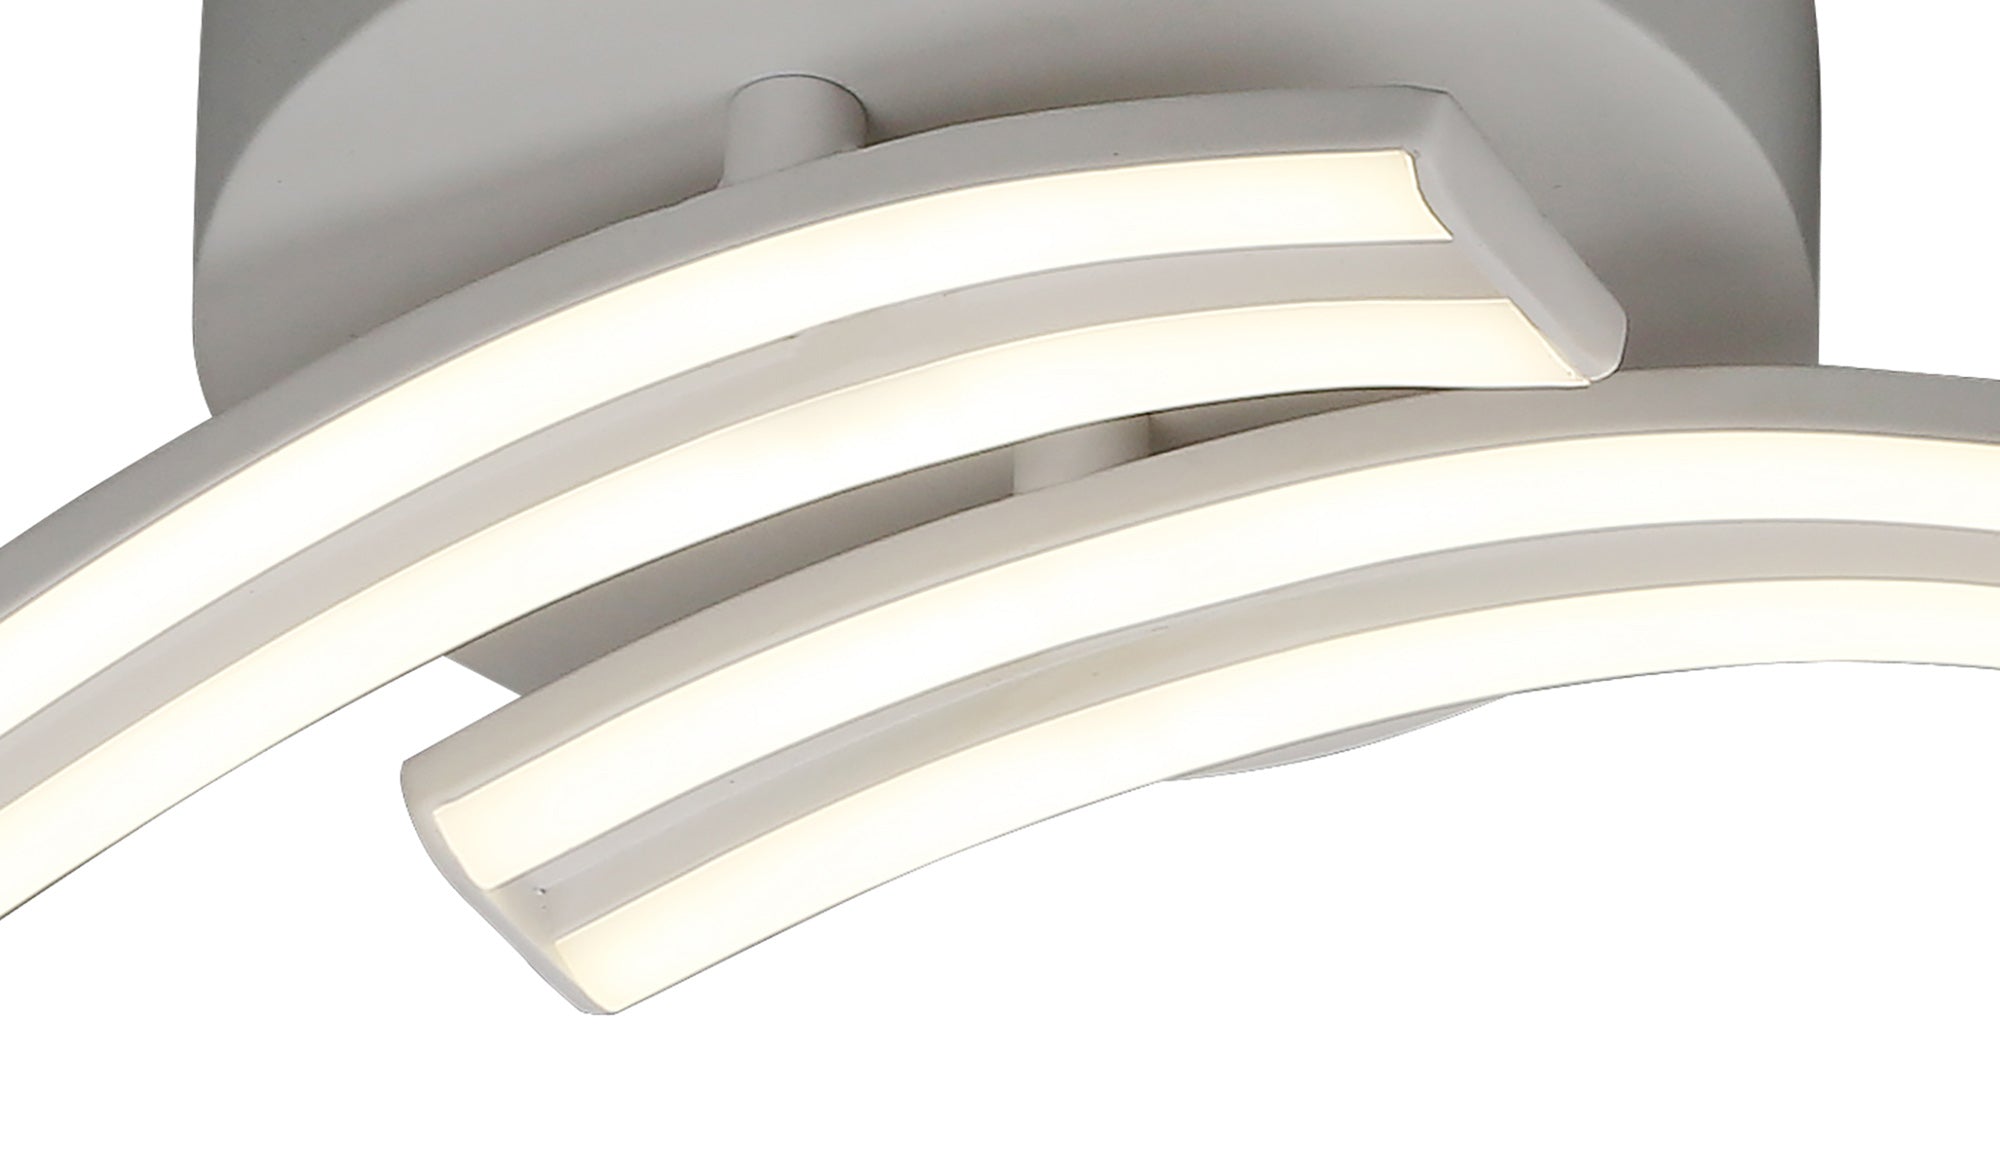 Jupita 2 Light Ceiling, Wall, 2 x 12W LED, 4000K, 1556lm, White, 3yrs Warranty